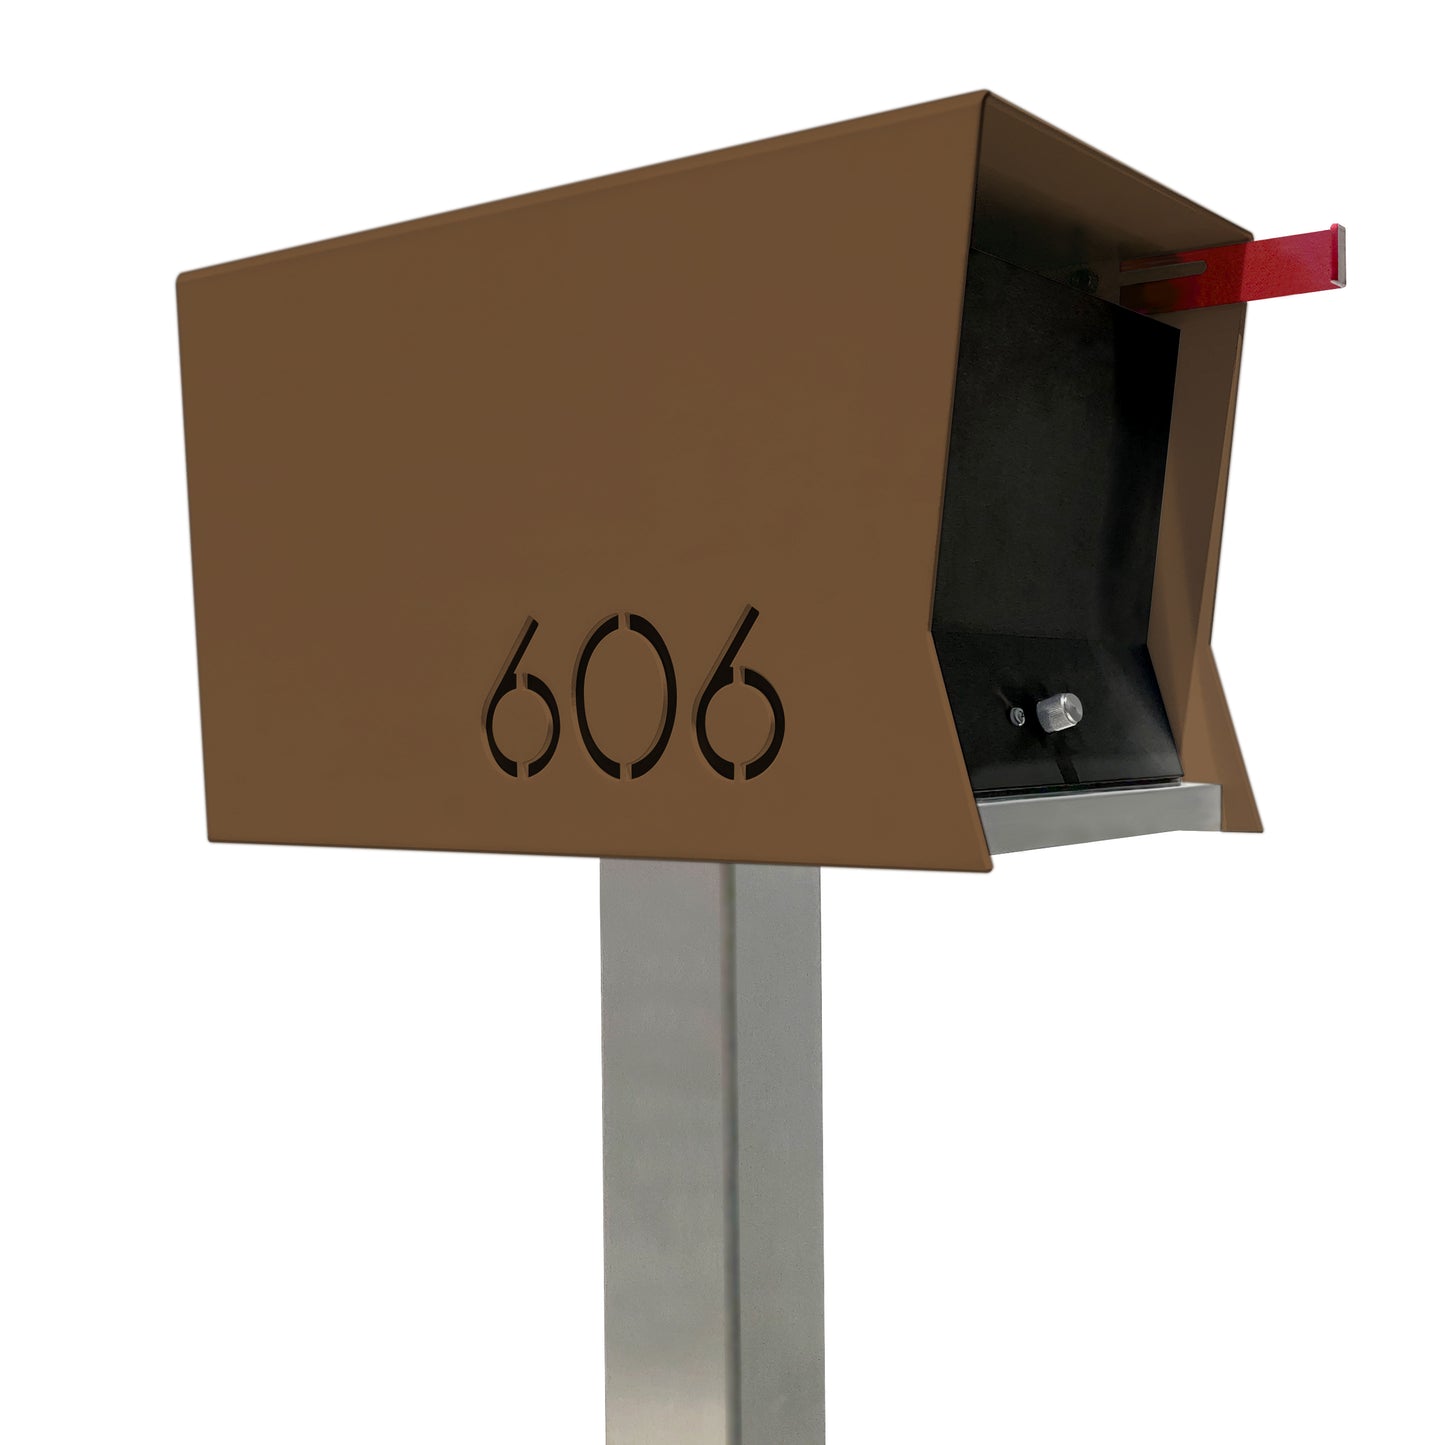 The Original Retrobox in COCONUT - Modern Mailbox brown and black